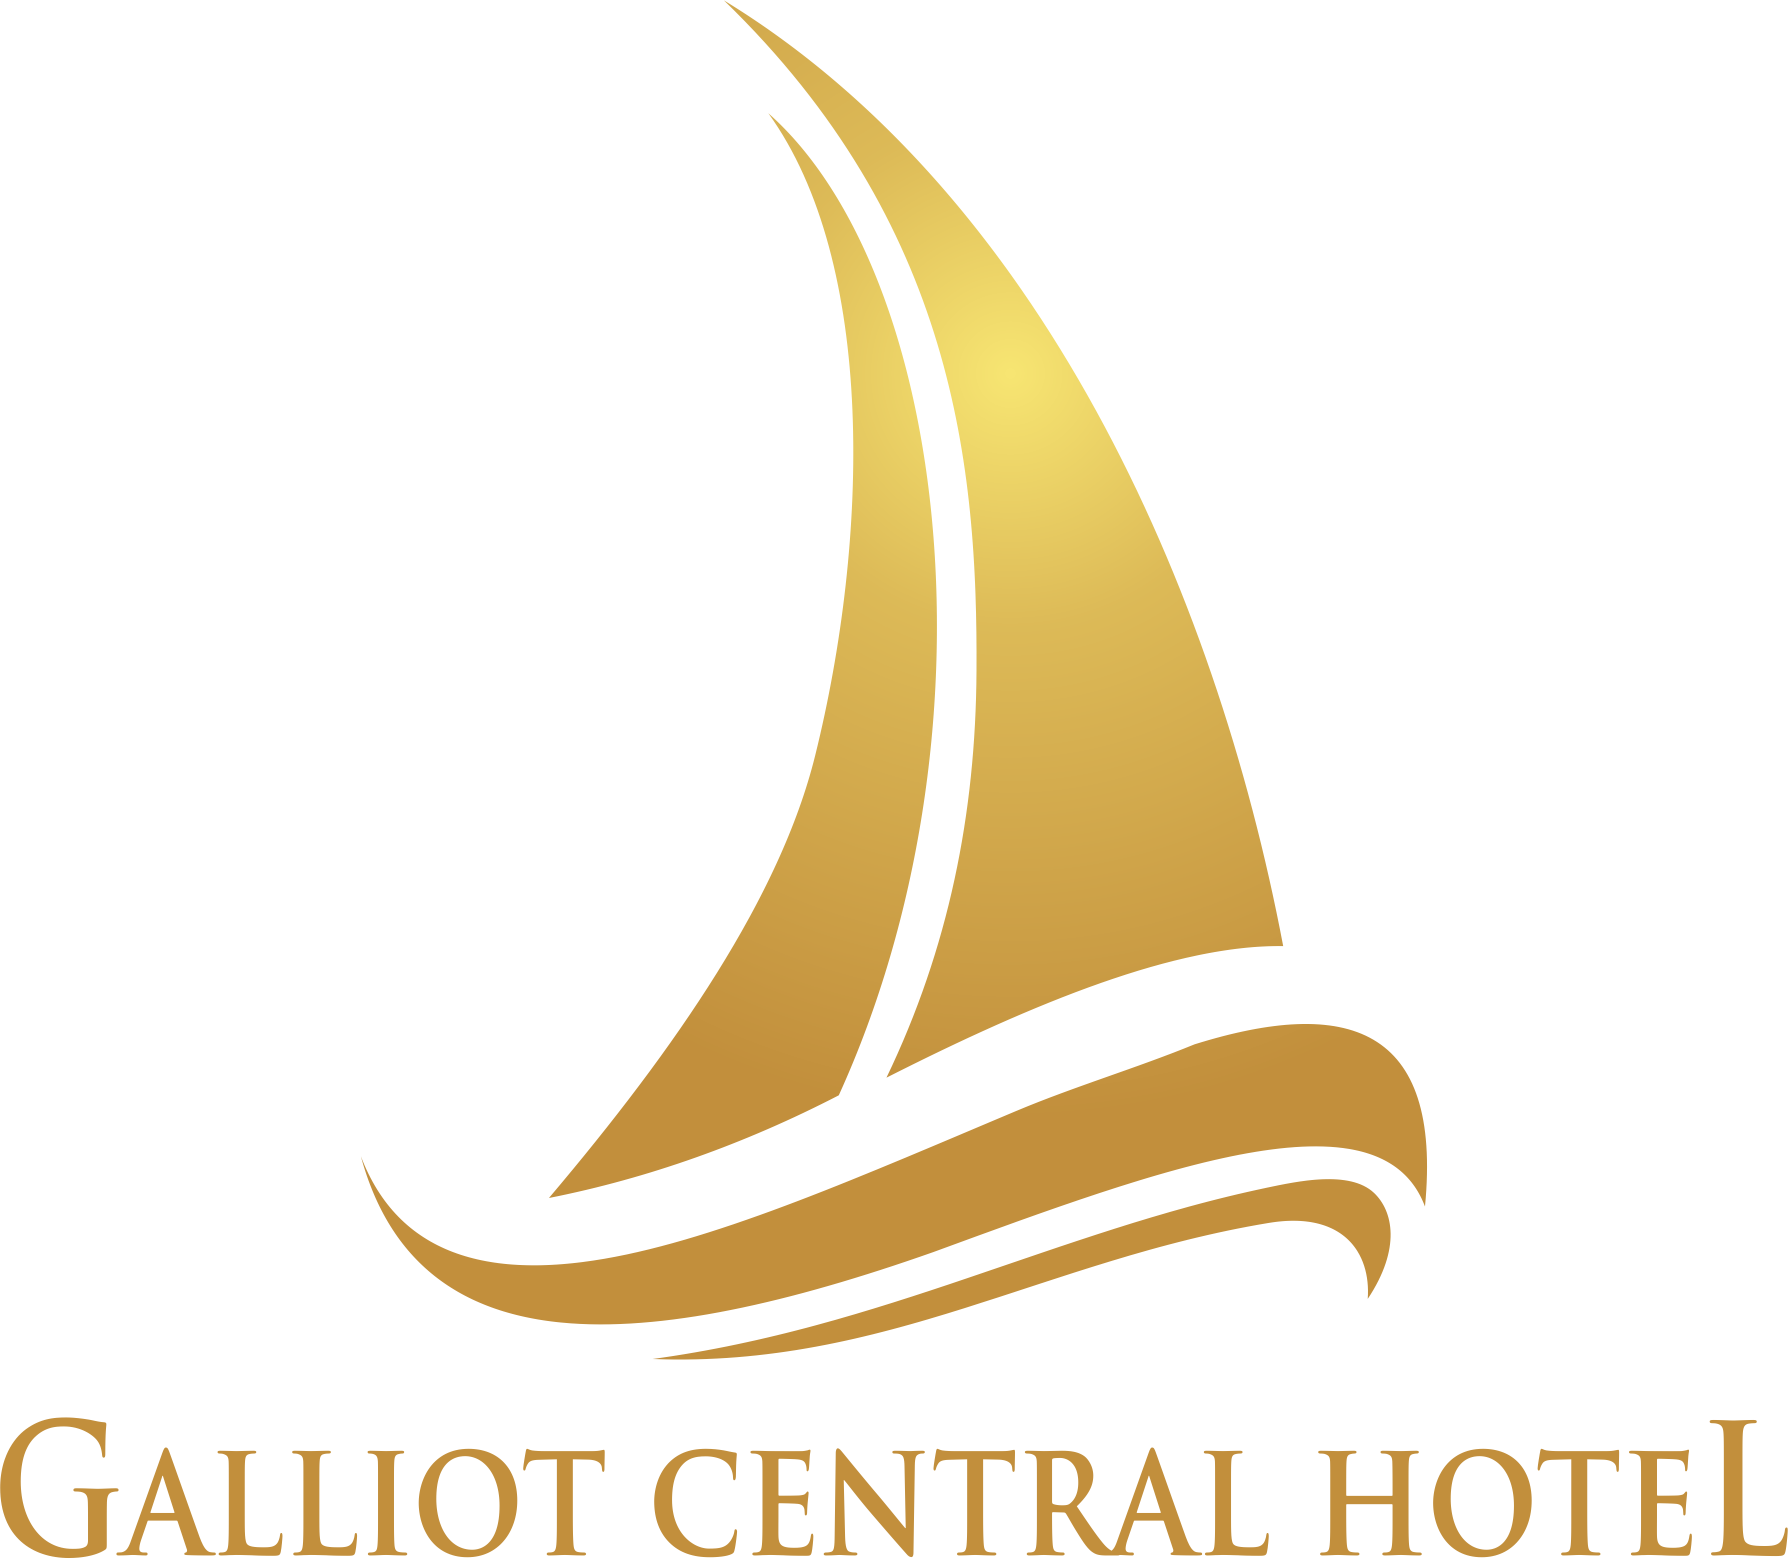 Galliot Central Hotel – Official Website